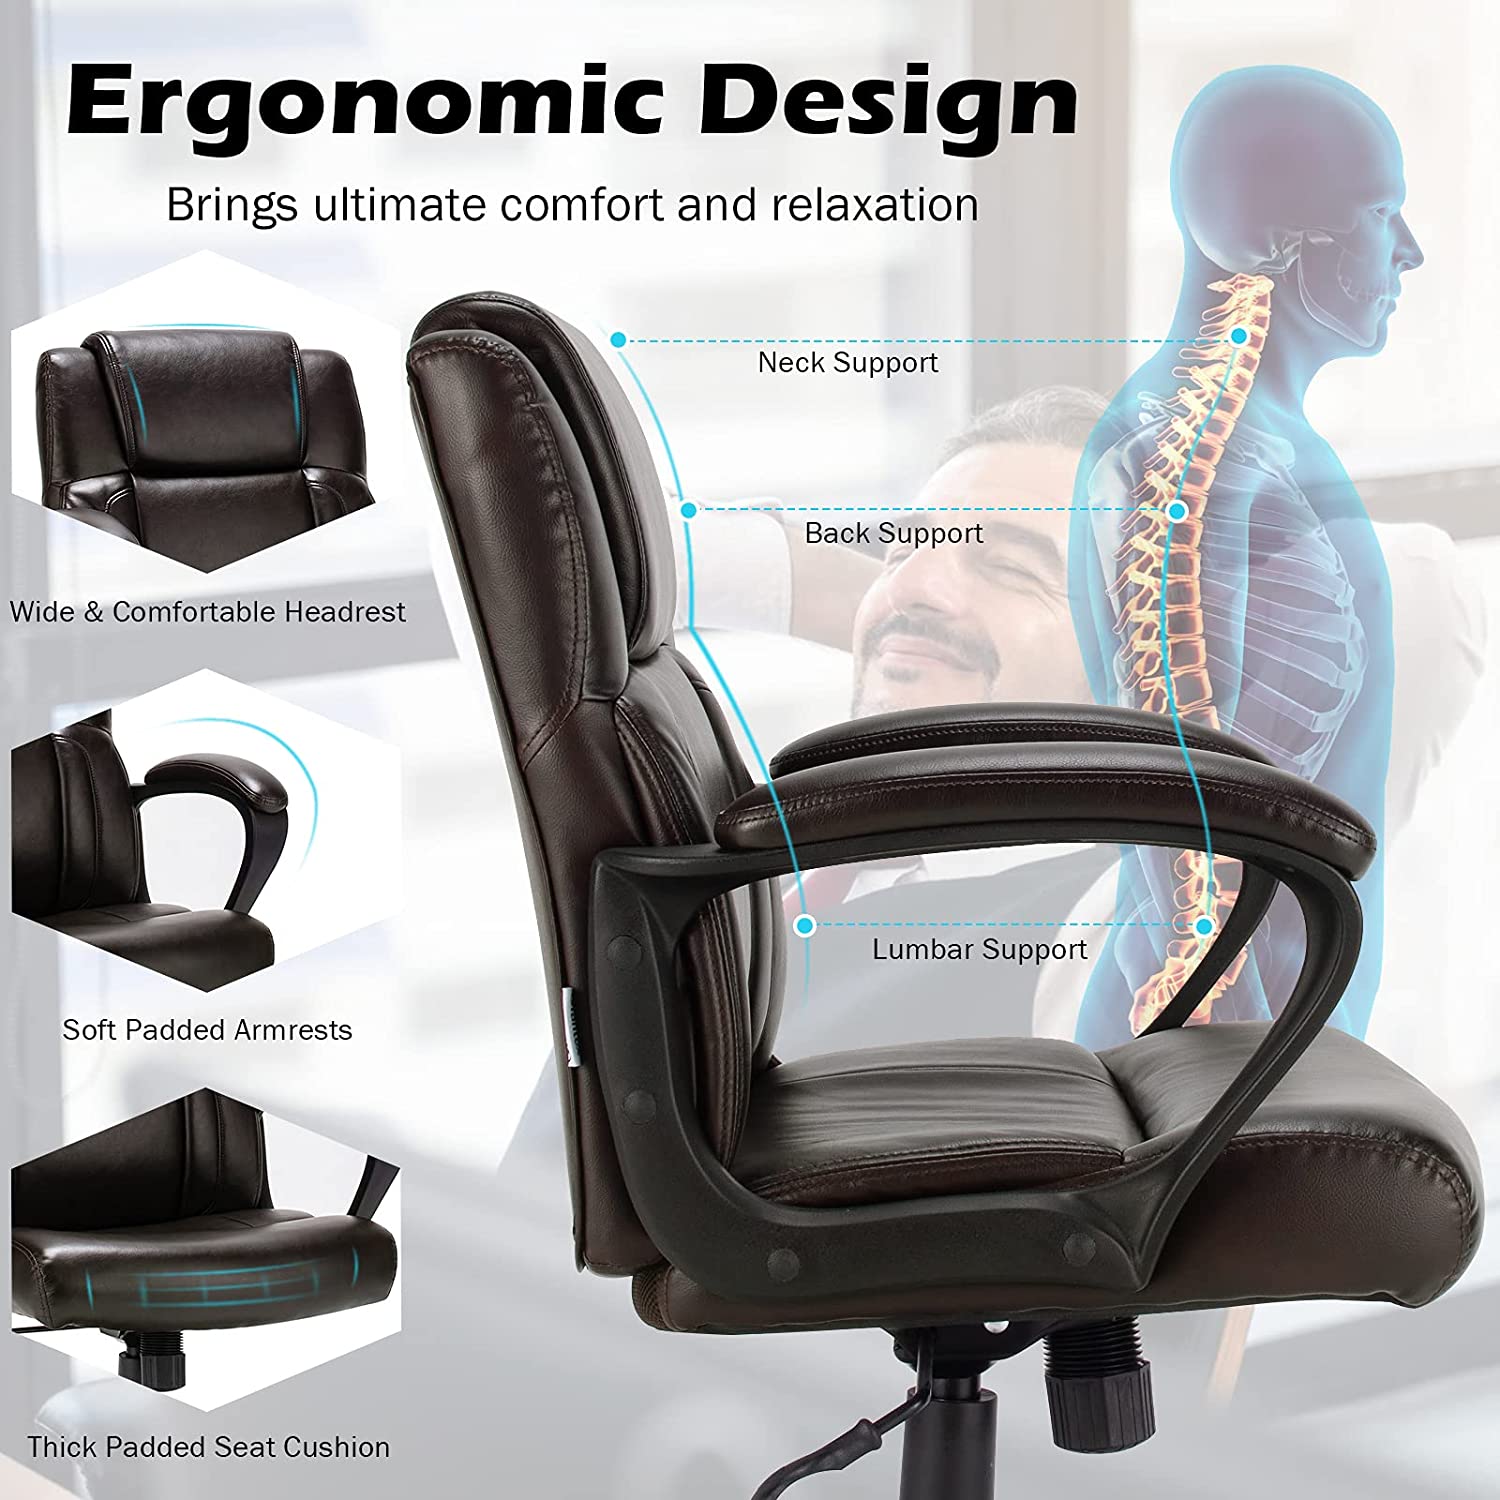 Giantex Office Chair,w/ Padded Armrests, Height Adjustable Swivel Task Chair (Dark Brown)